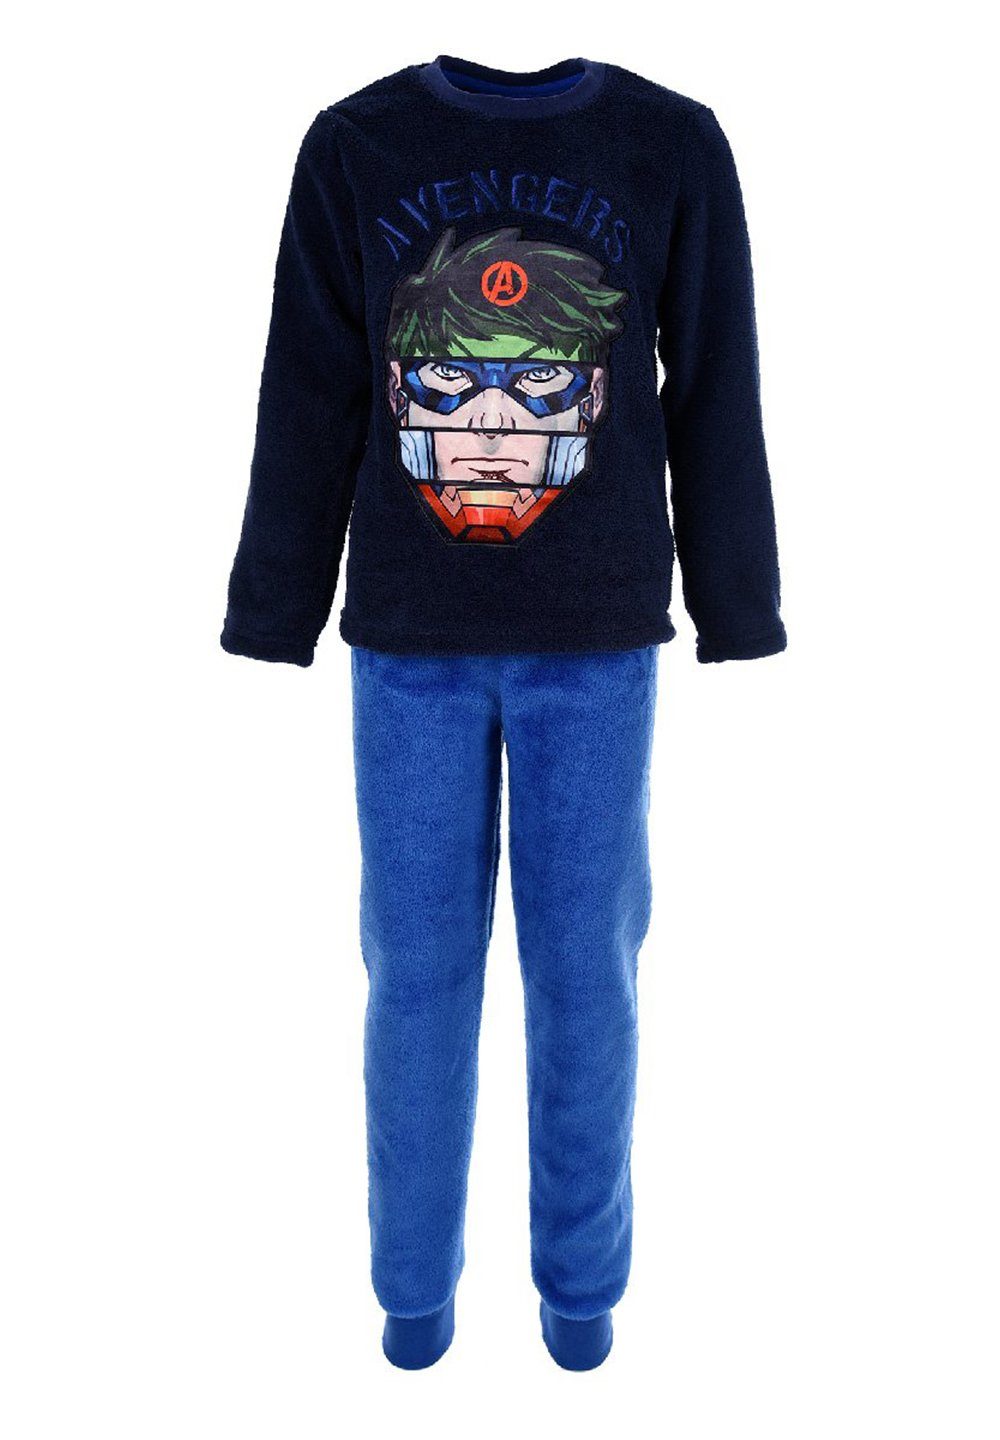 The AVENGERS Schlafanzug Ironman Hulk Thor Captain America Kinder Jungen Fleece Pyjama langarm Nachtwäsche Dunkel-Blau